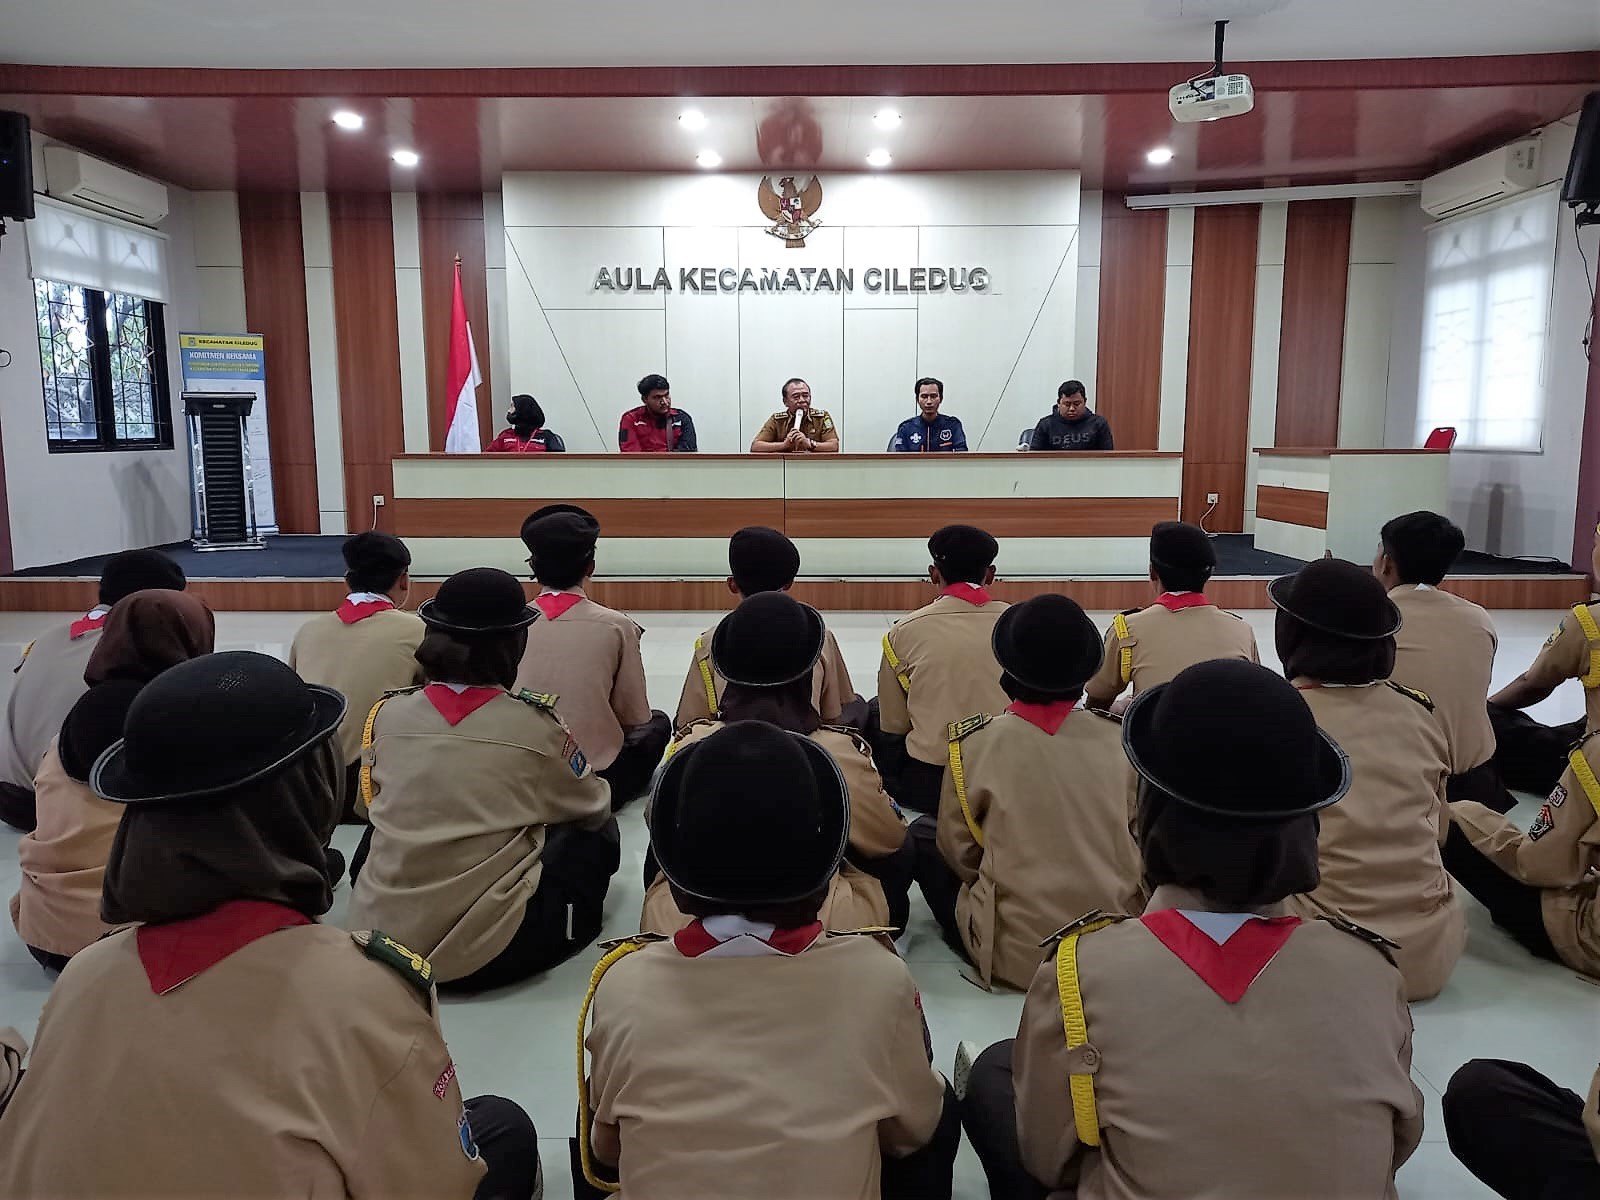 Pelepasan Peserta Raimuna Cabang Kota Tangerang Kontingen Kwartir Ranting Ciledug oleh Ketua Mabiran Kak M. Marwan